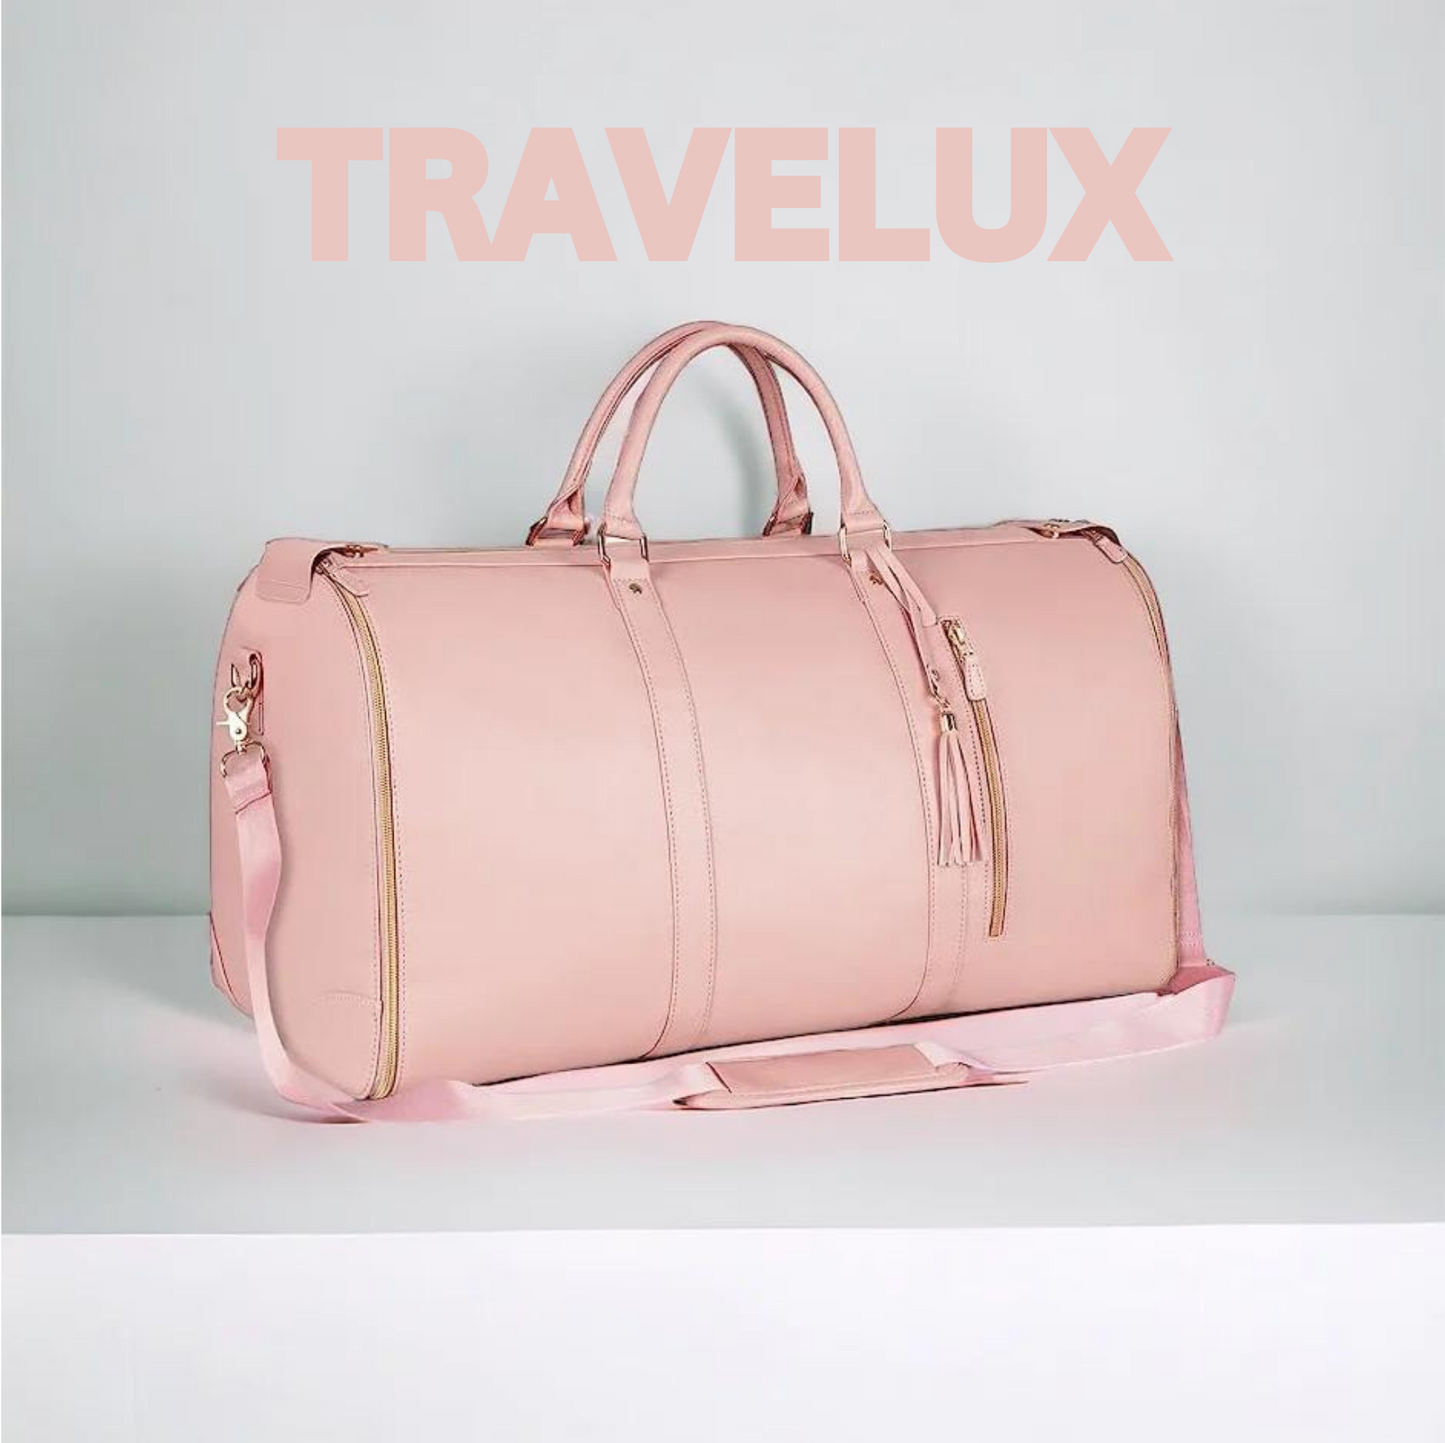 TraveLux Bag